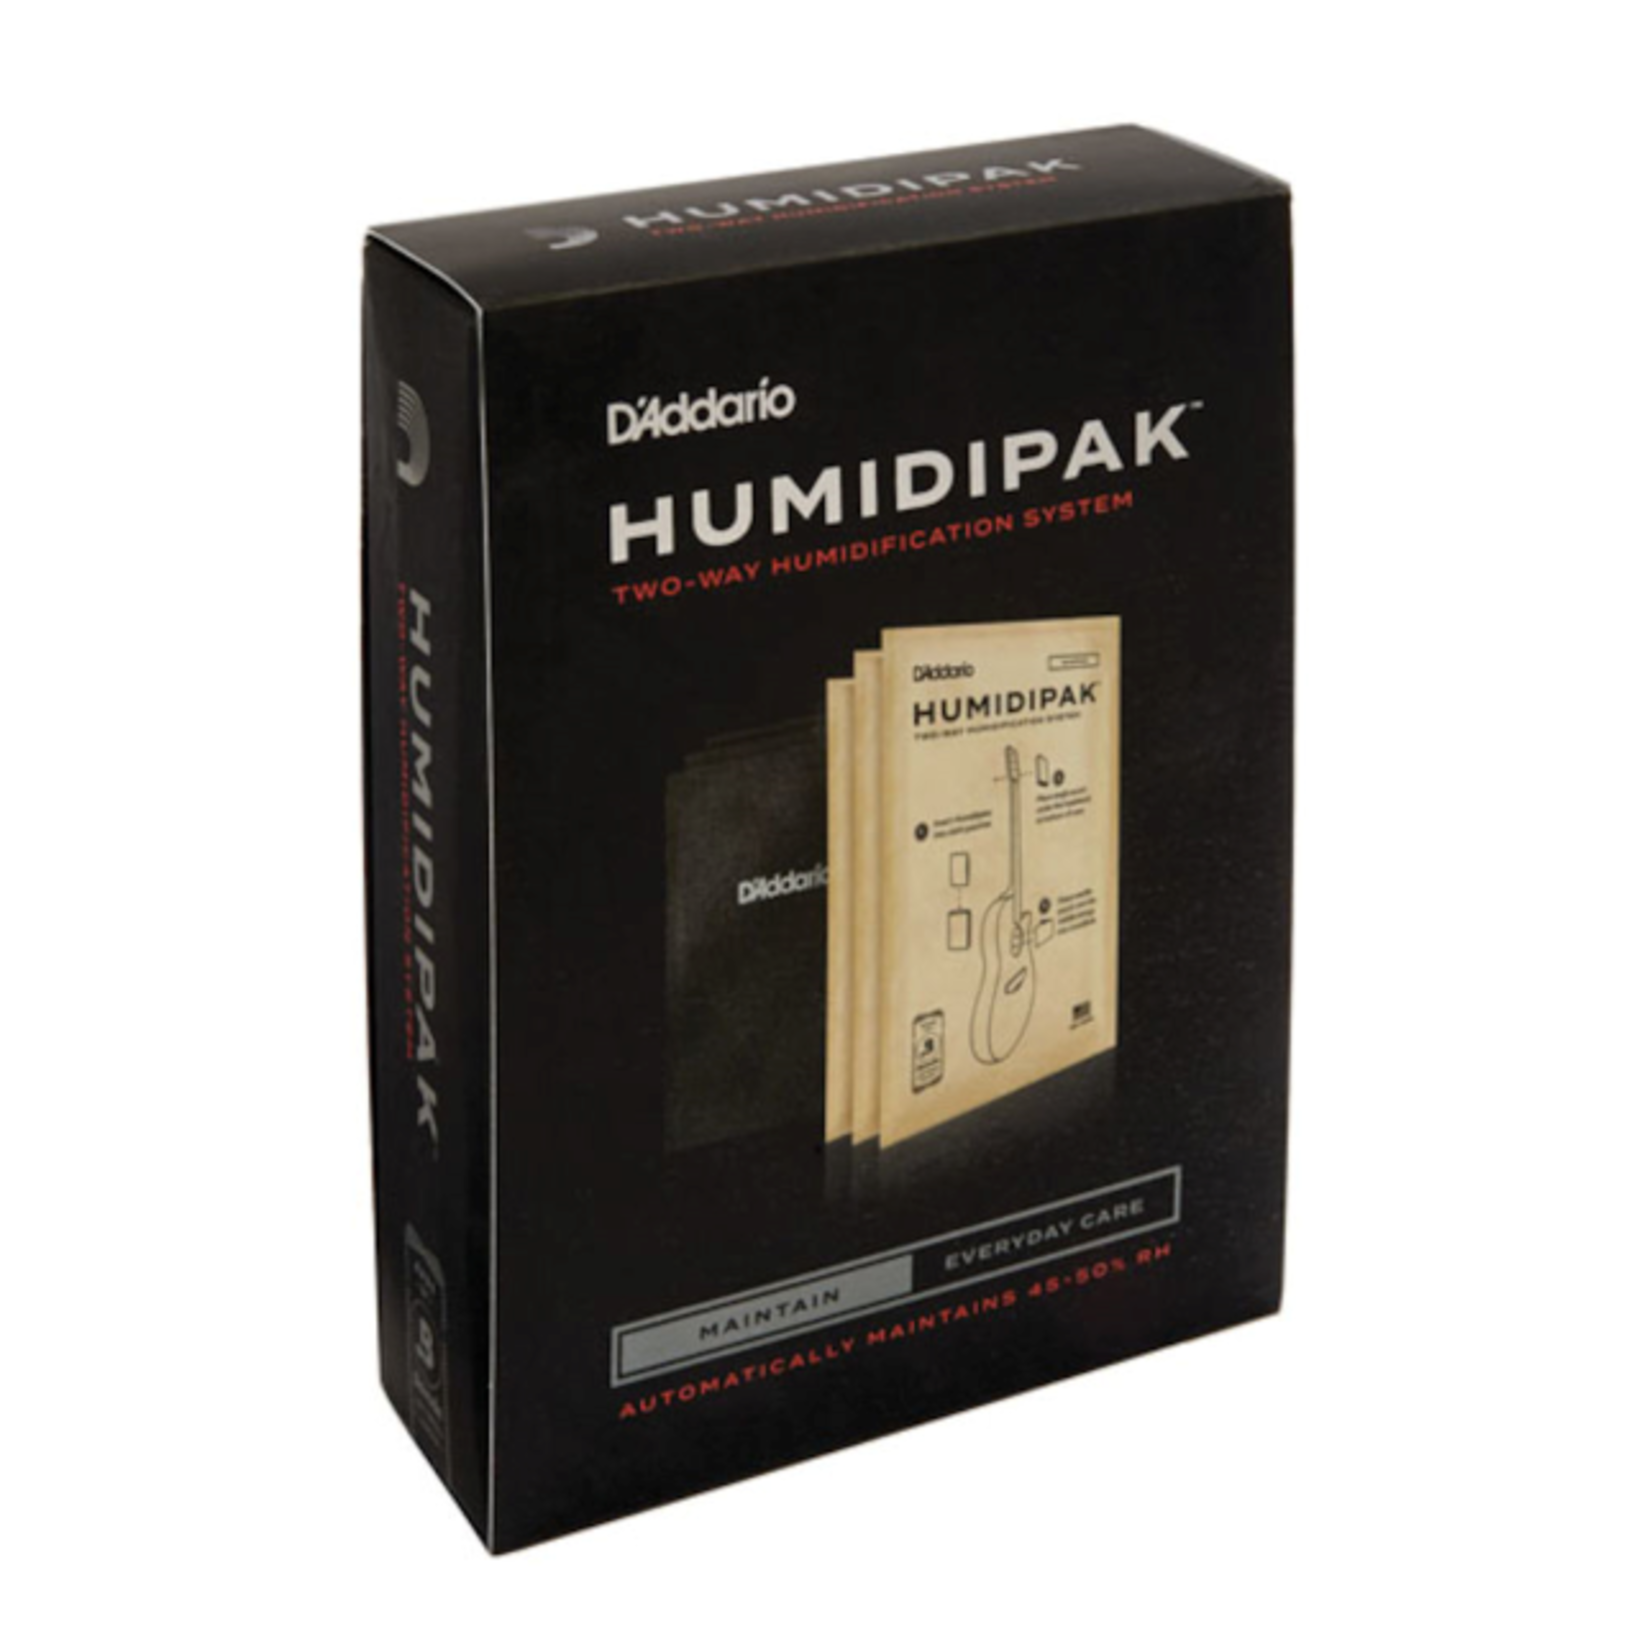 D'Addario Humidipak Two-Way Instrument Humidification System